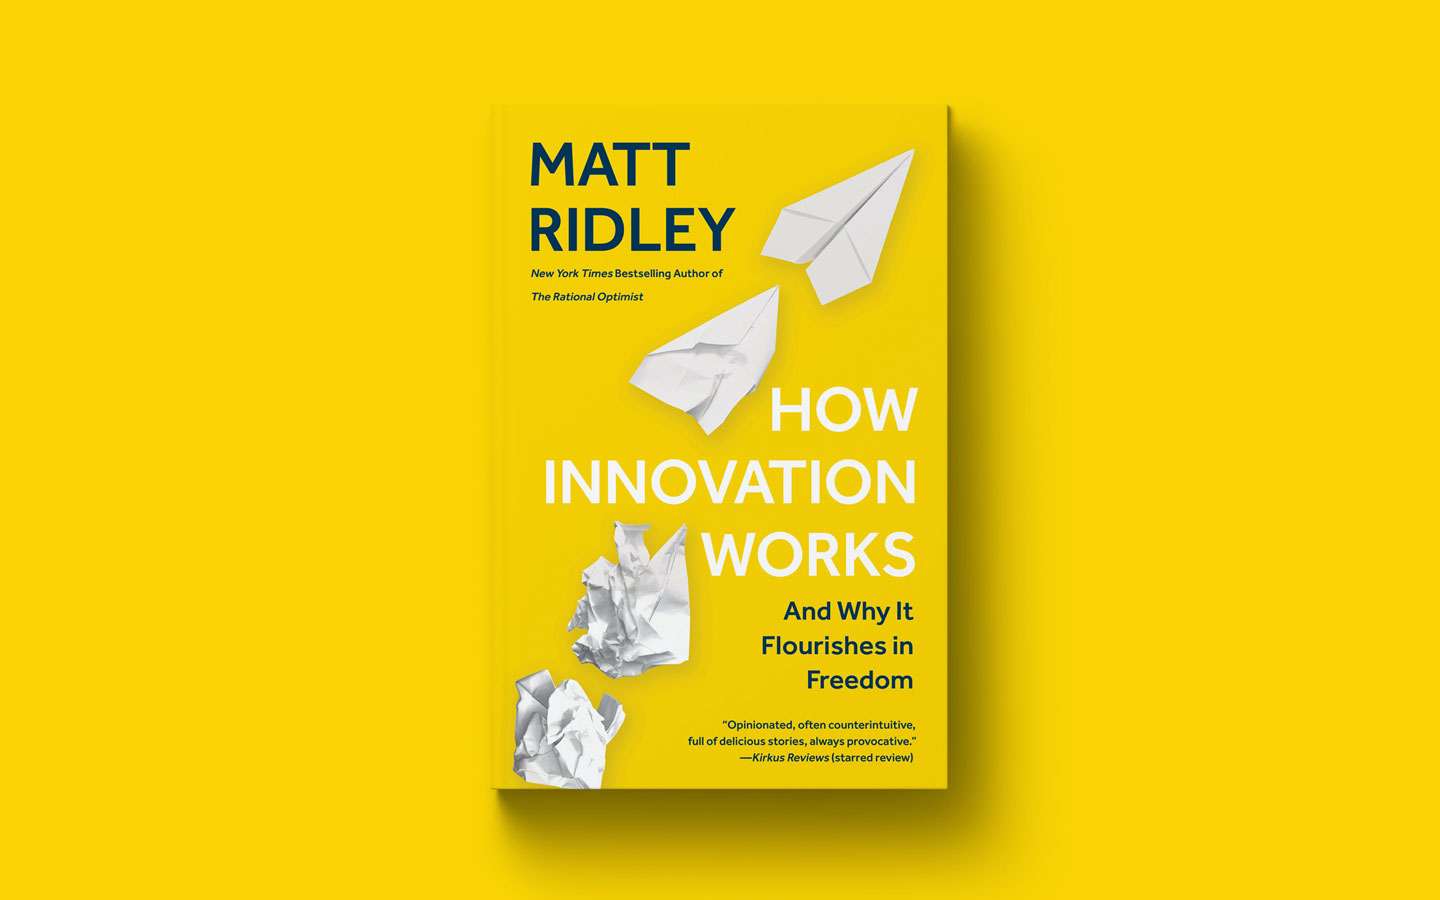 Matt Ridley How Innovation works Photo by unsplash.com